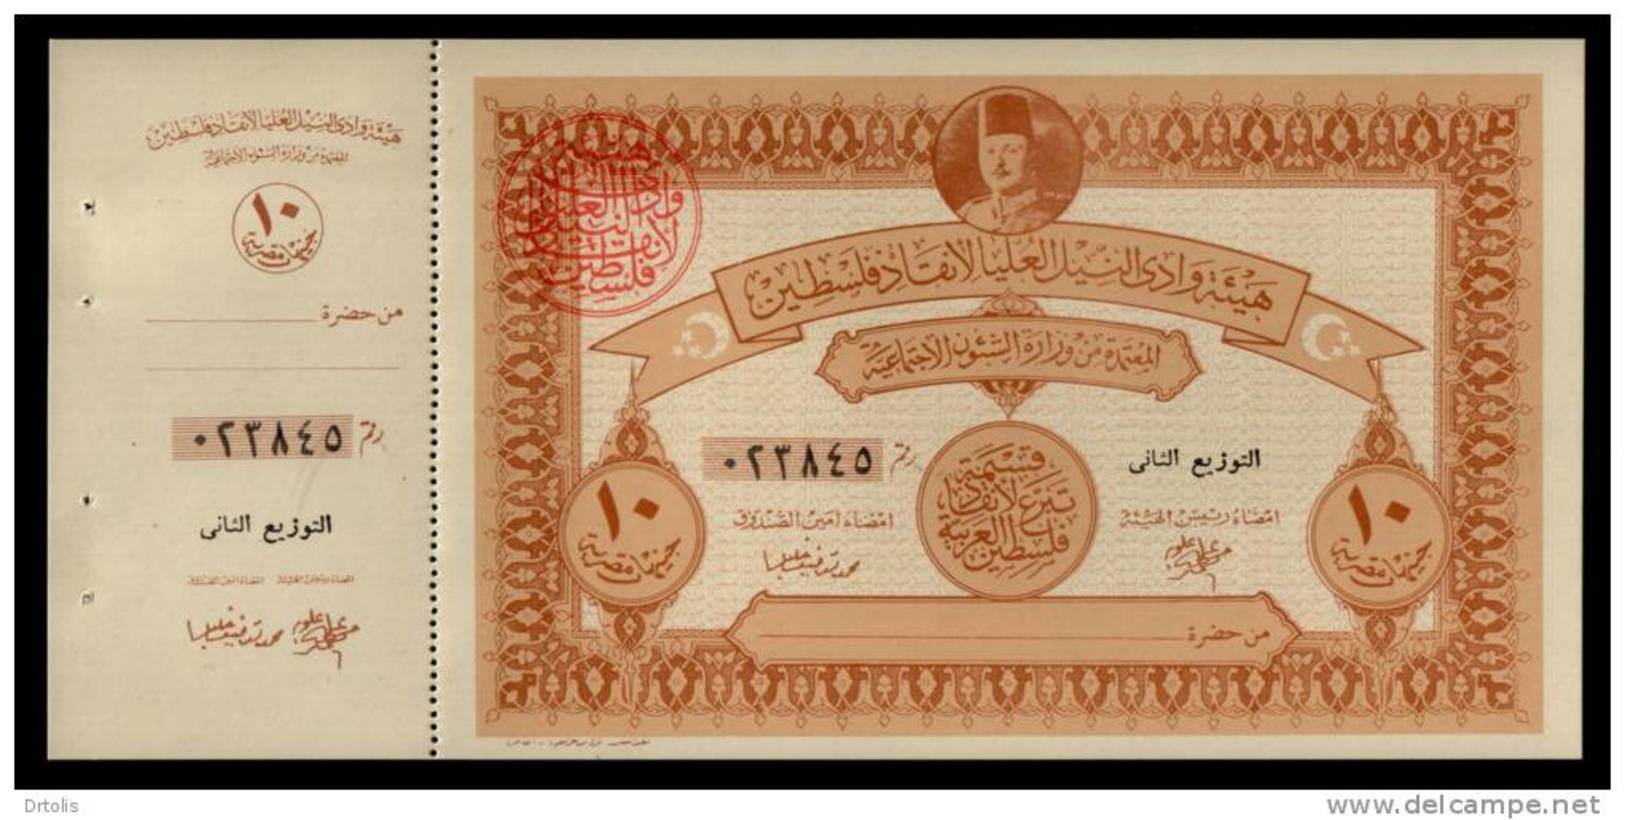 EGYPT / 1948 / KING FAROK DONATION TO SAVE PALESTINE / UNCER. BOND ( 10 POUNDS ) - Aegypten